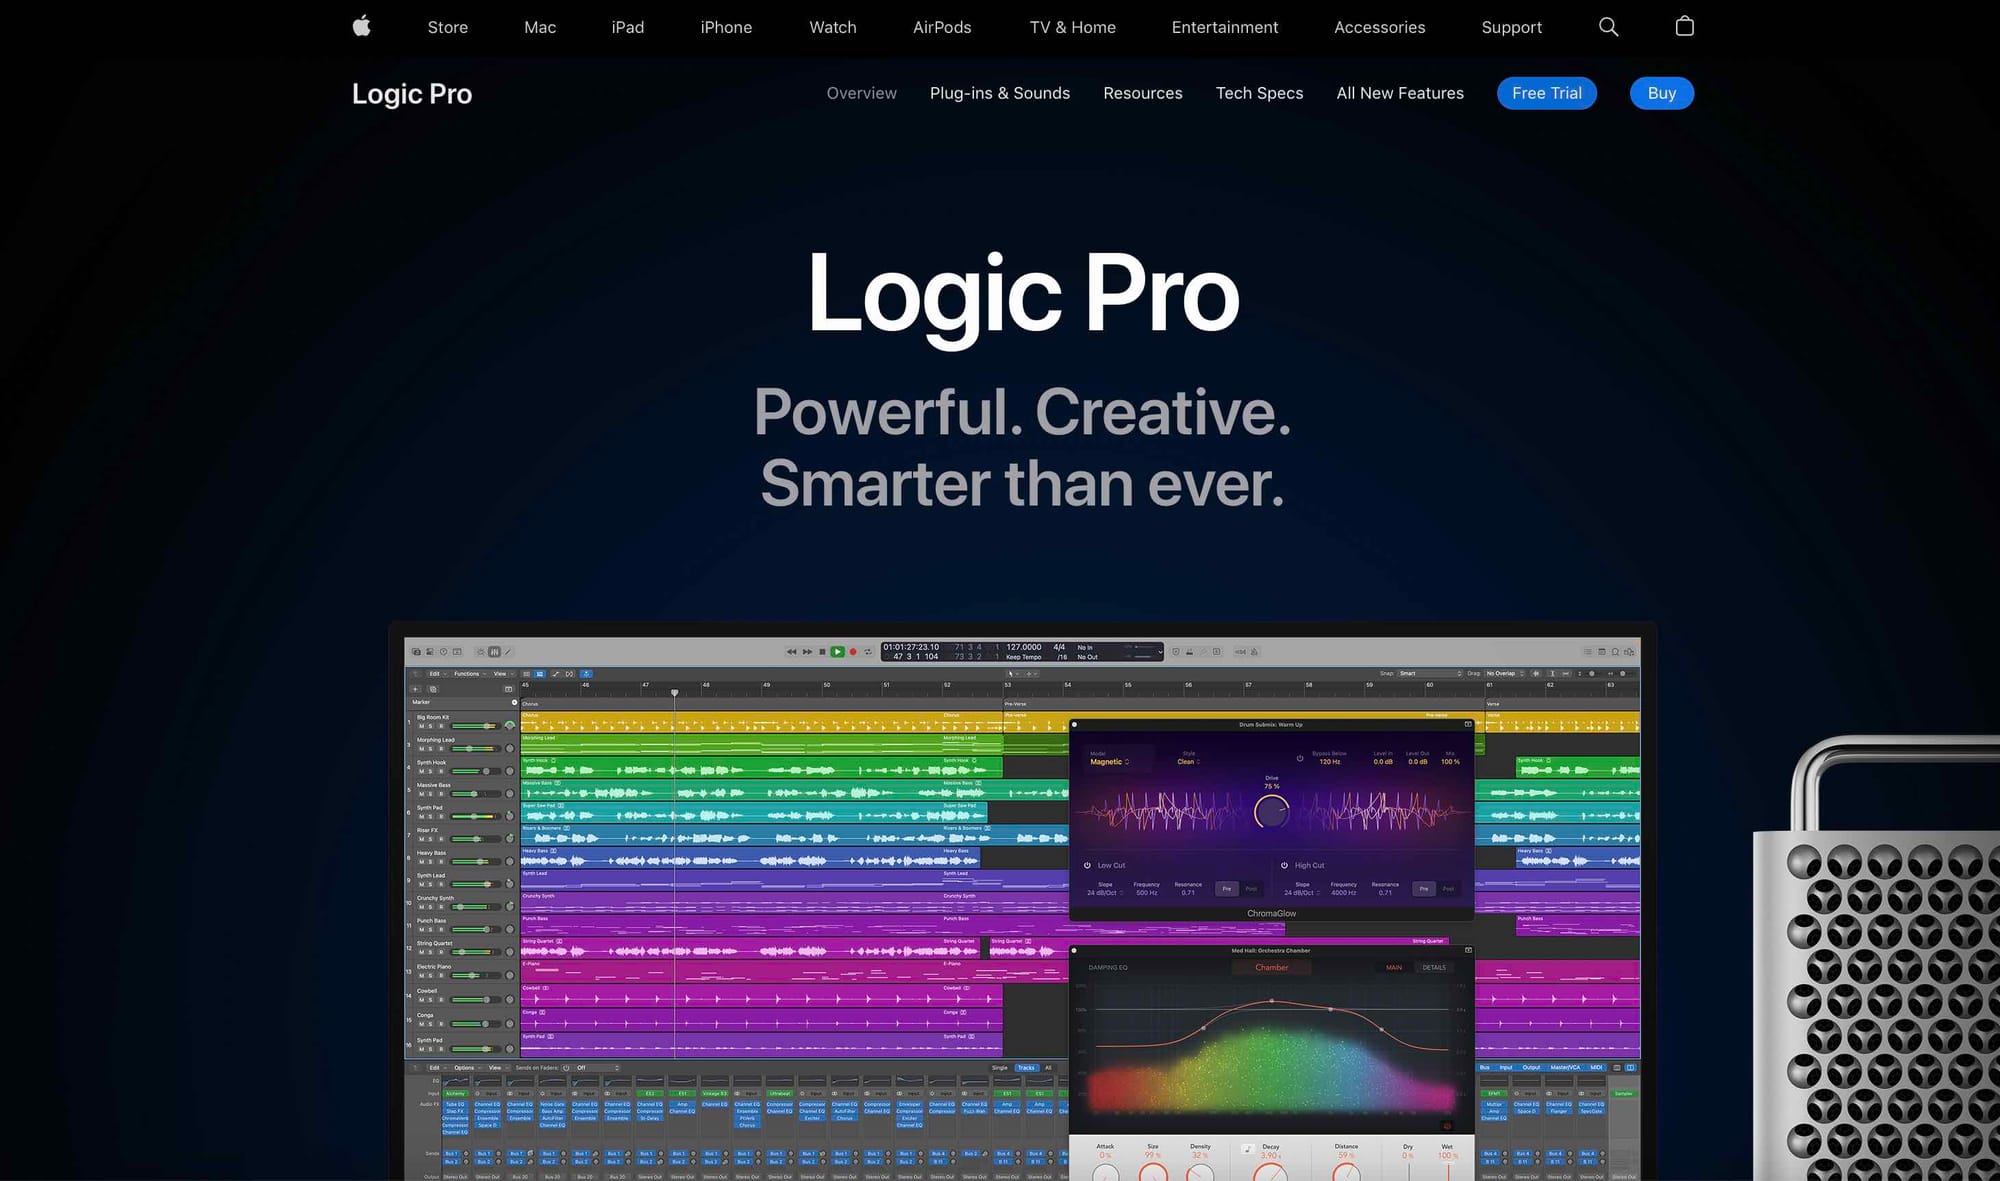 Logic Pro's homepage